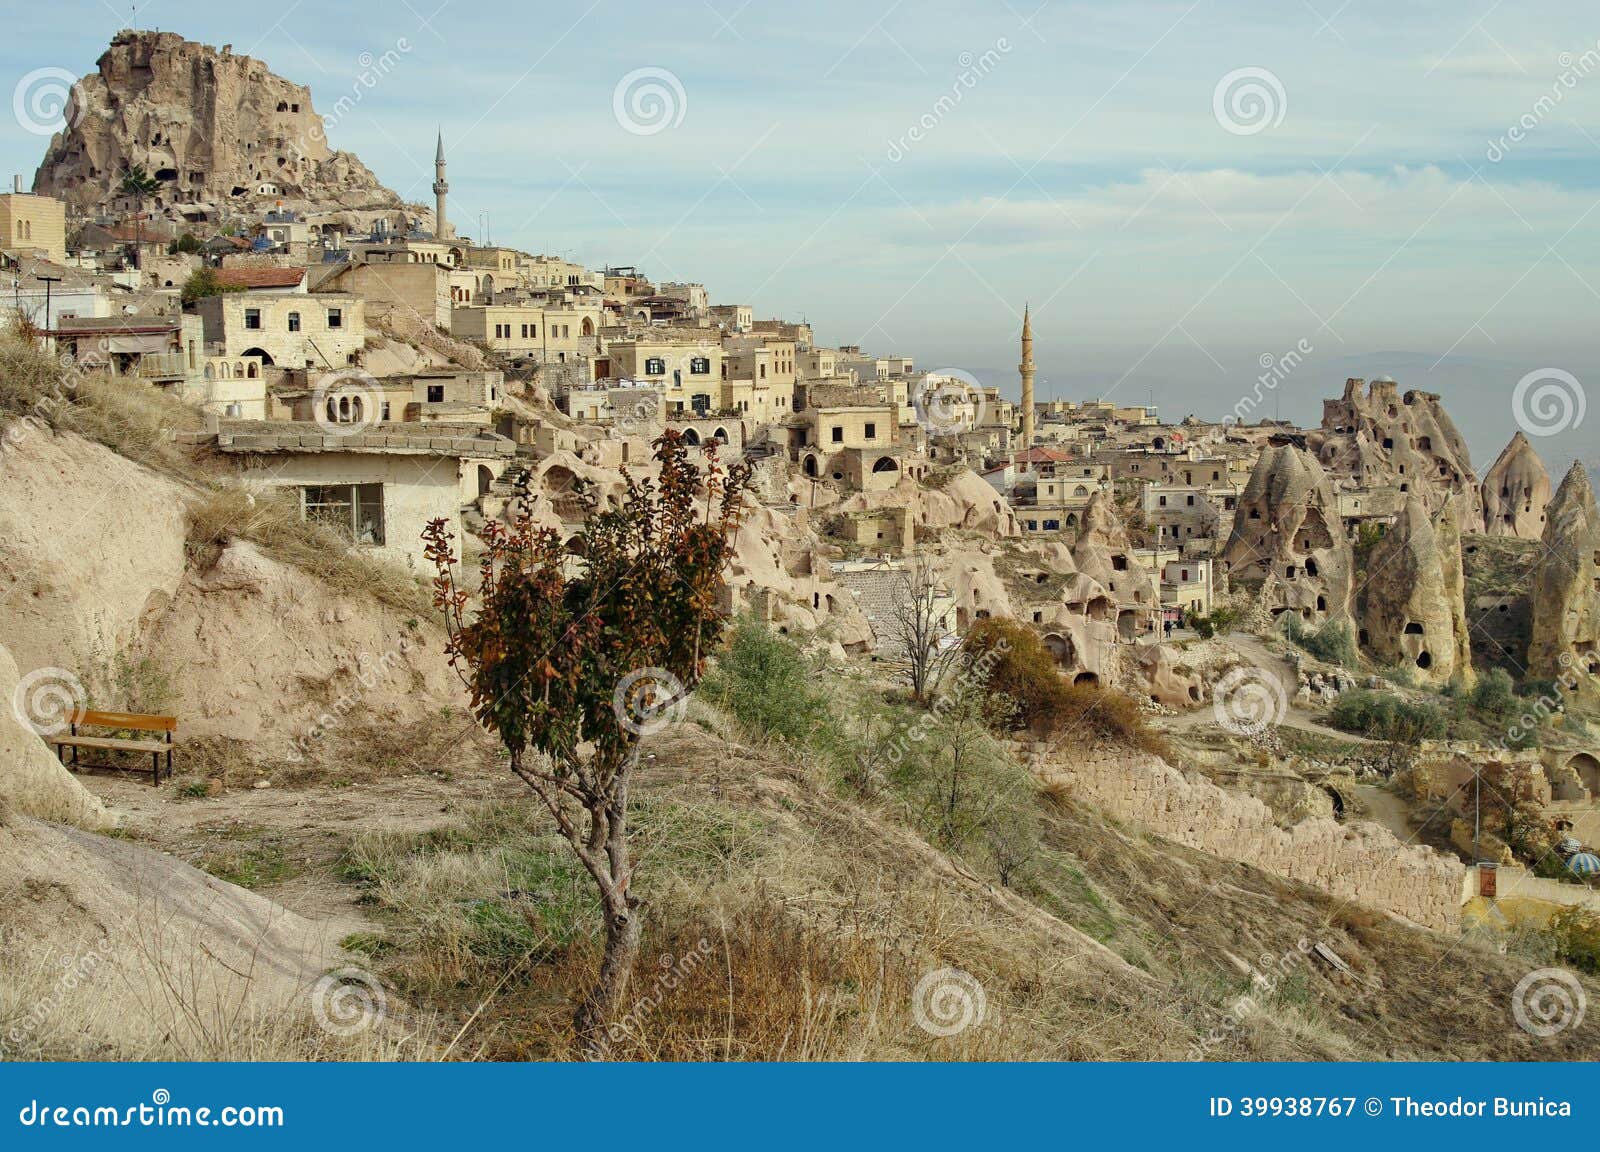 hilly landscape. goreme, cappadocia - landmark attraction in turkey